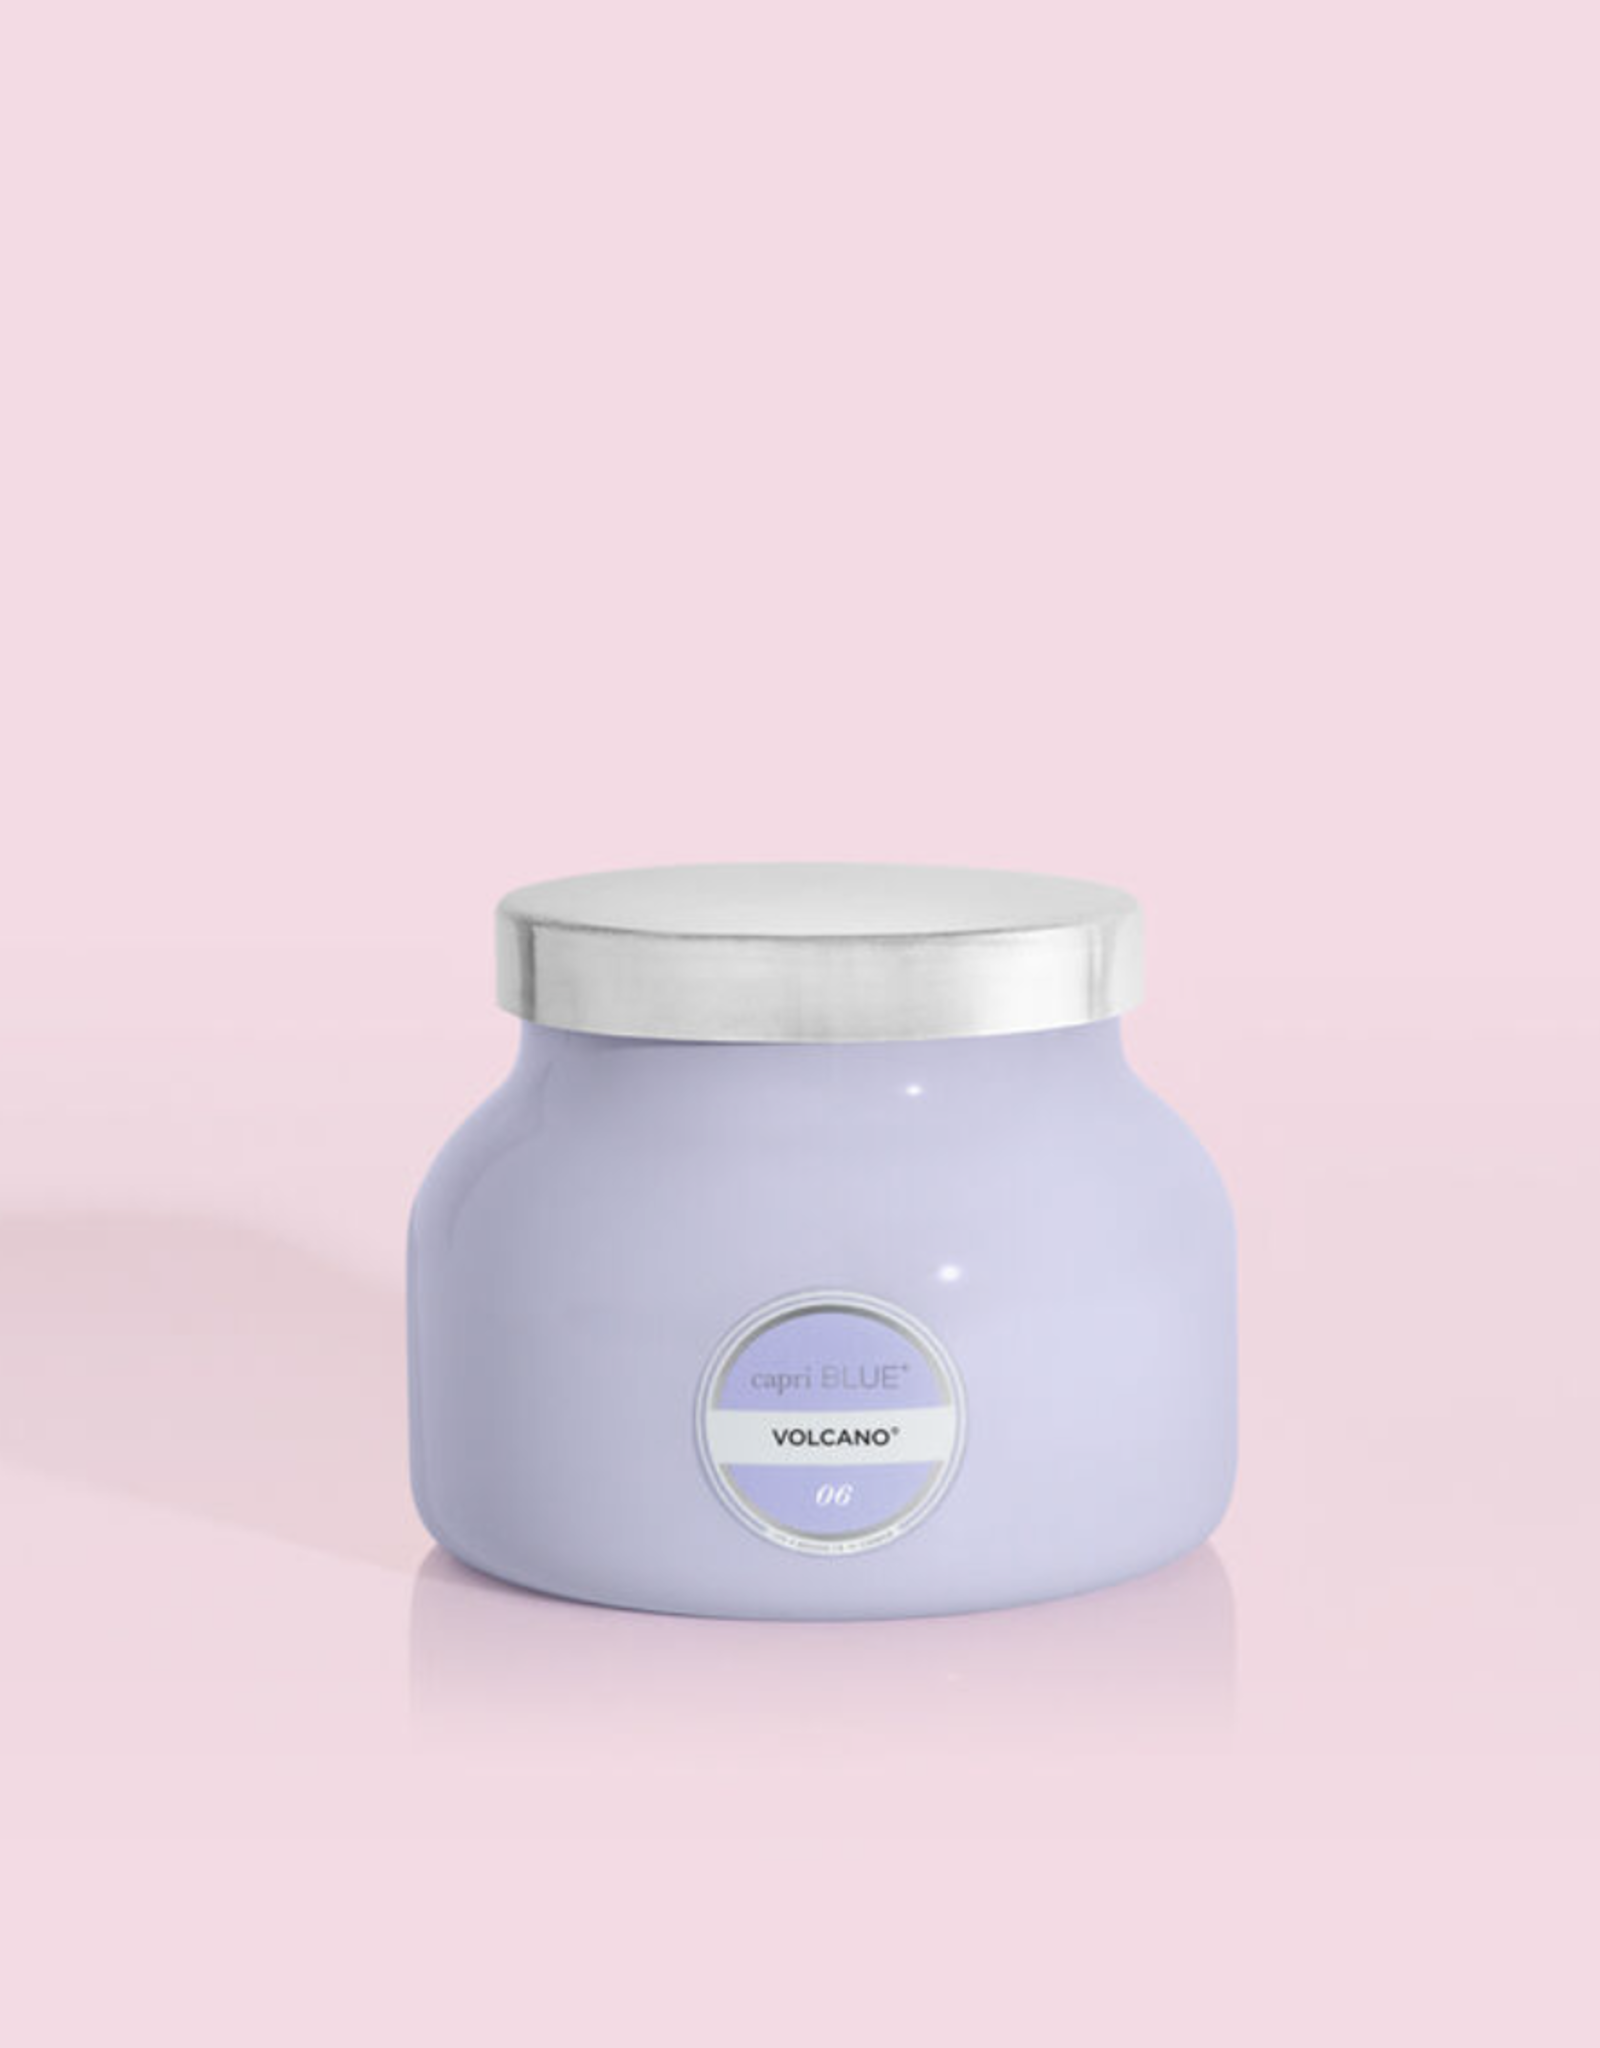 Capri Blue Volcano Lavender Petite Jar Candle